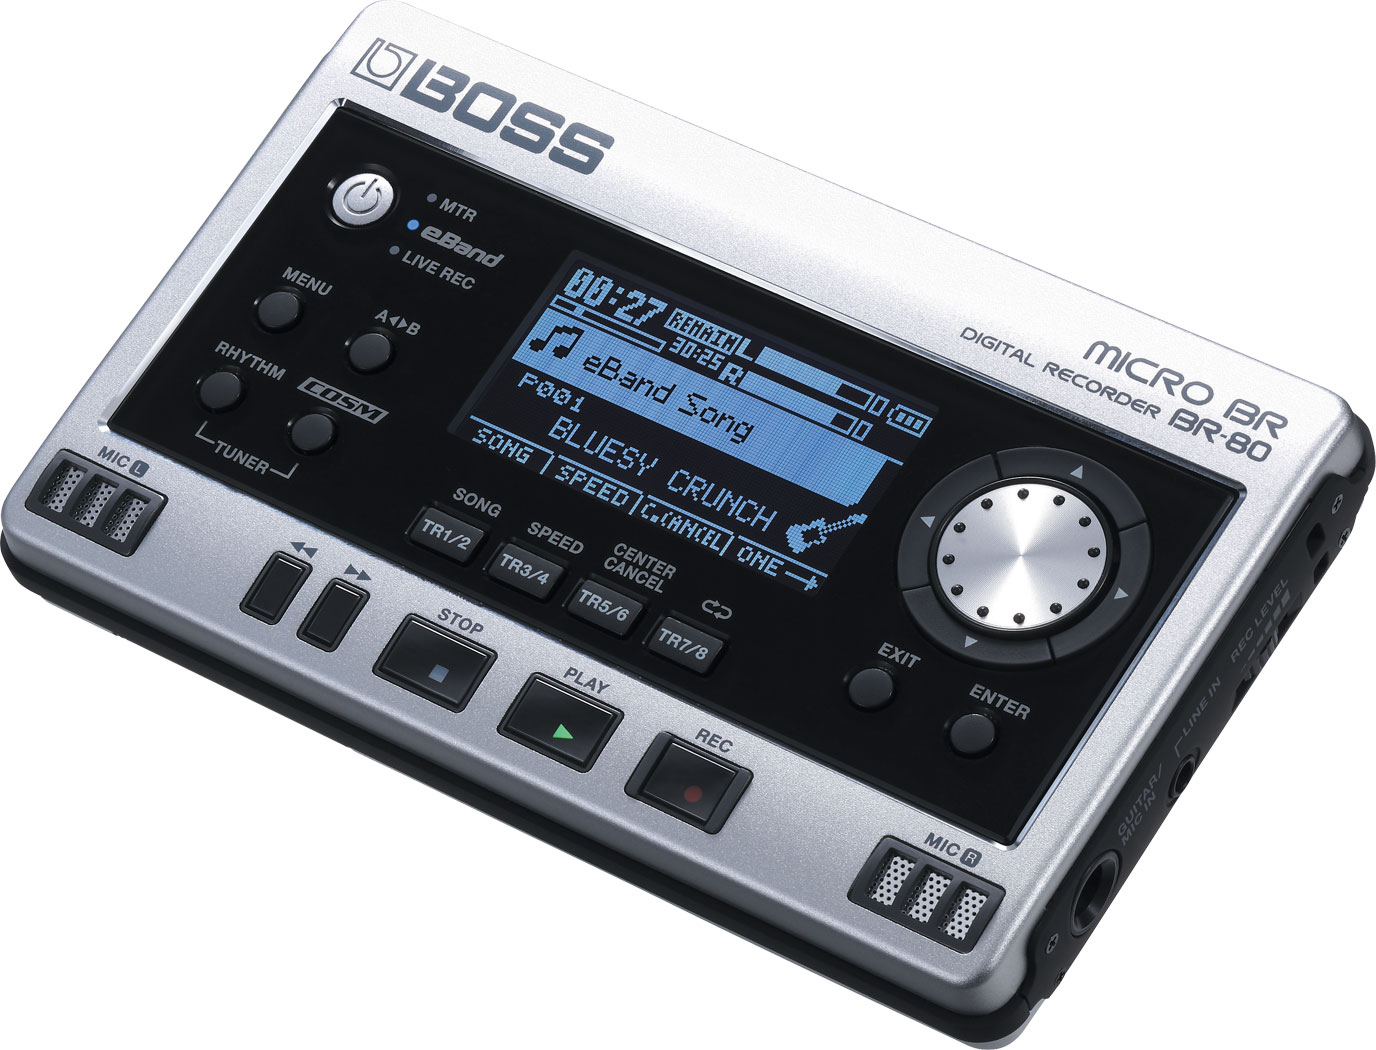 BOSS - MICRO BR BR-80 | Digital Recorder